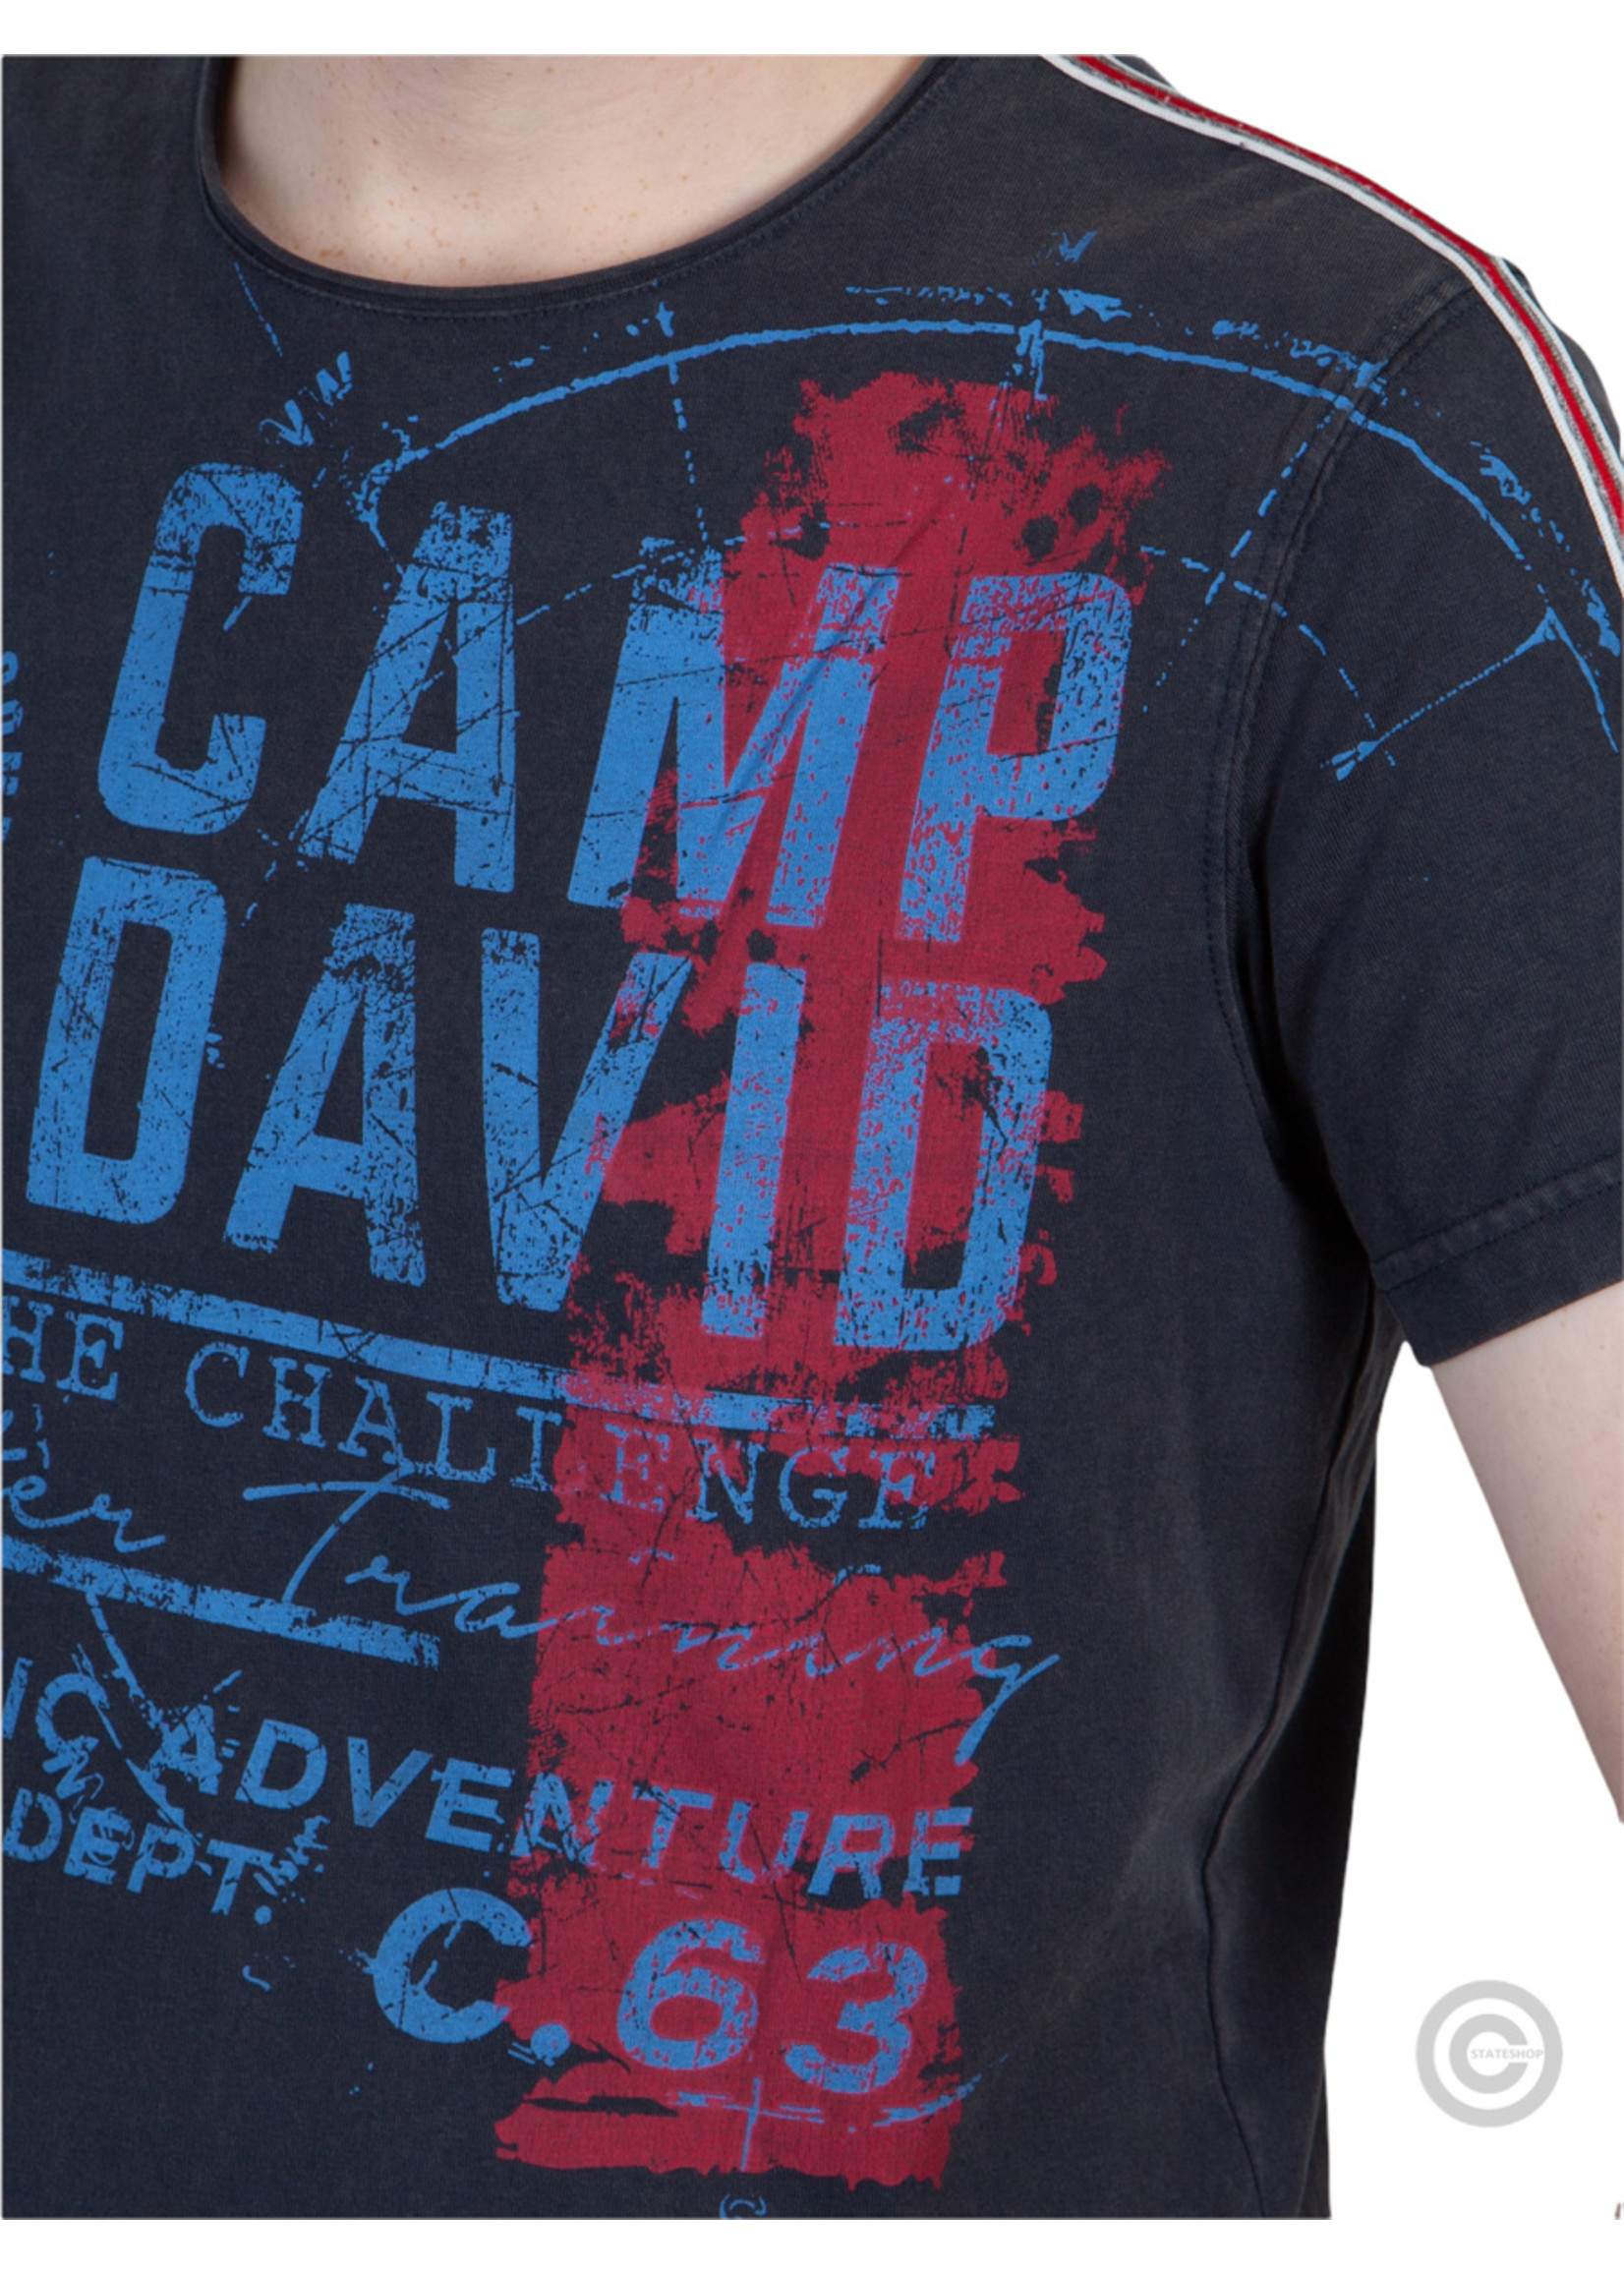 Camp David  Camp David, t-shirt in vintage look met labelprint